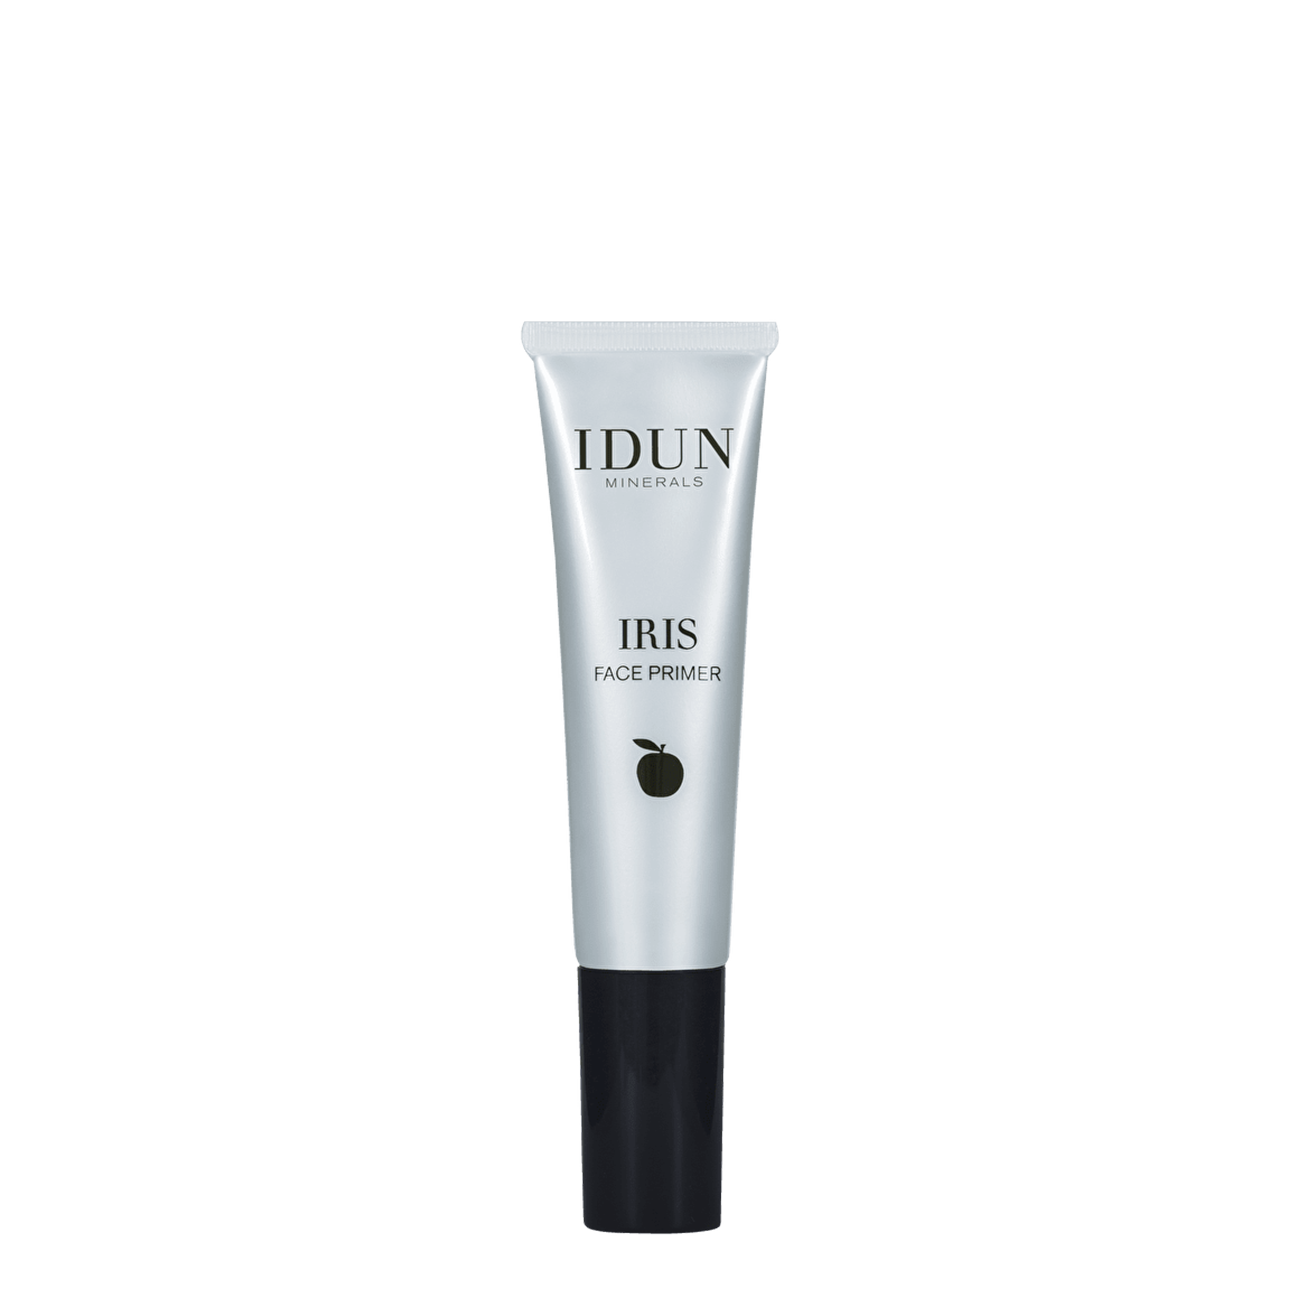 IDUN Minerals Face Primer Iris